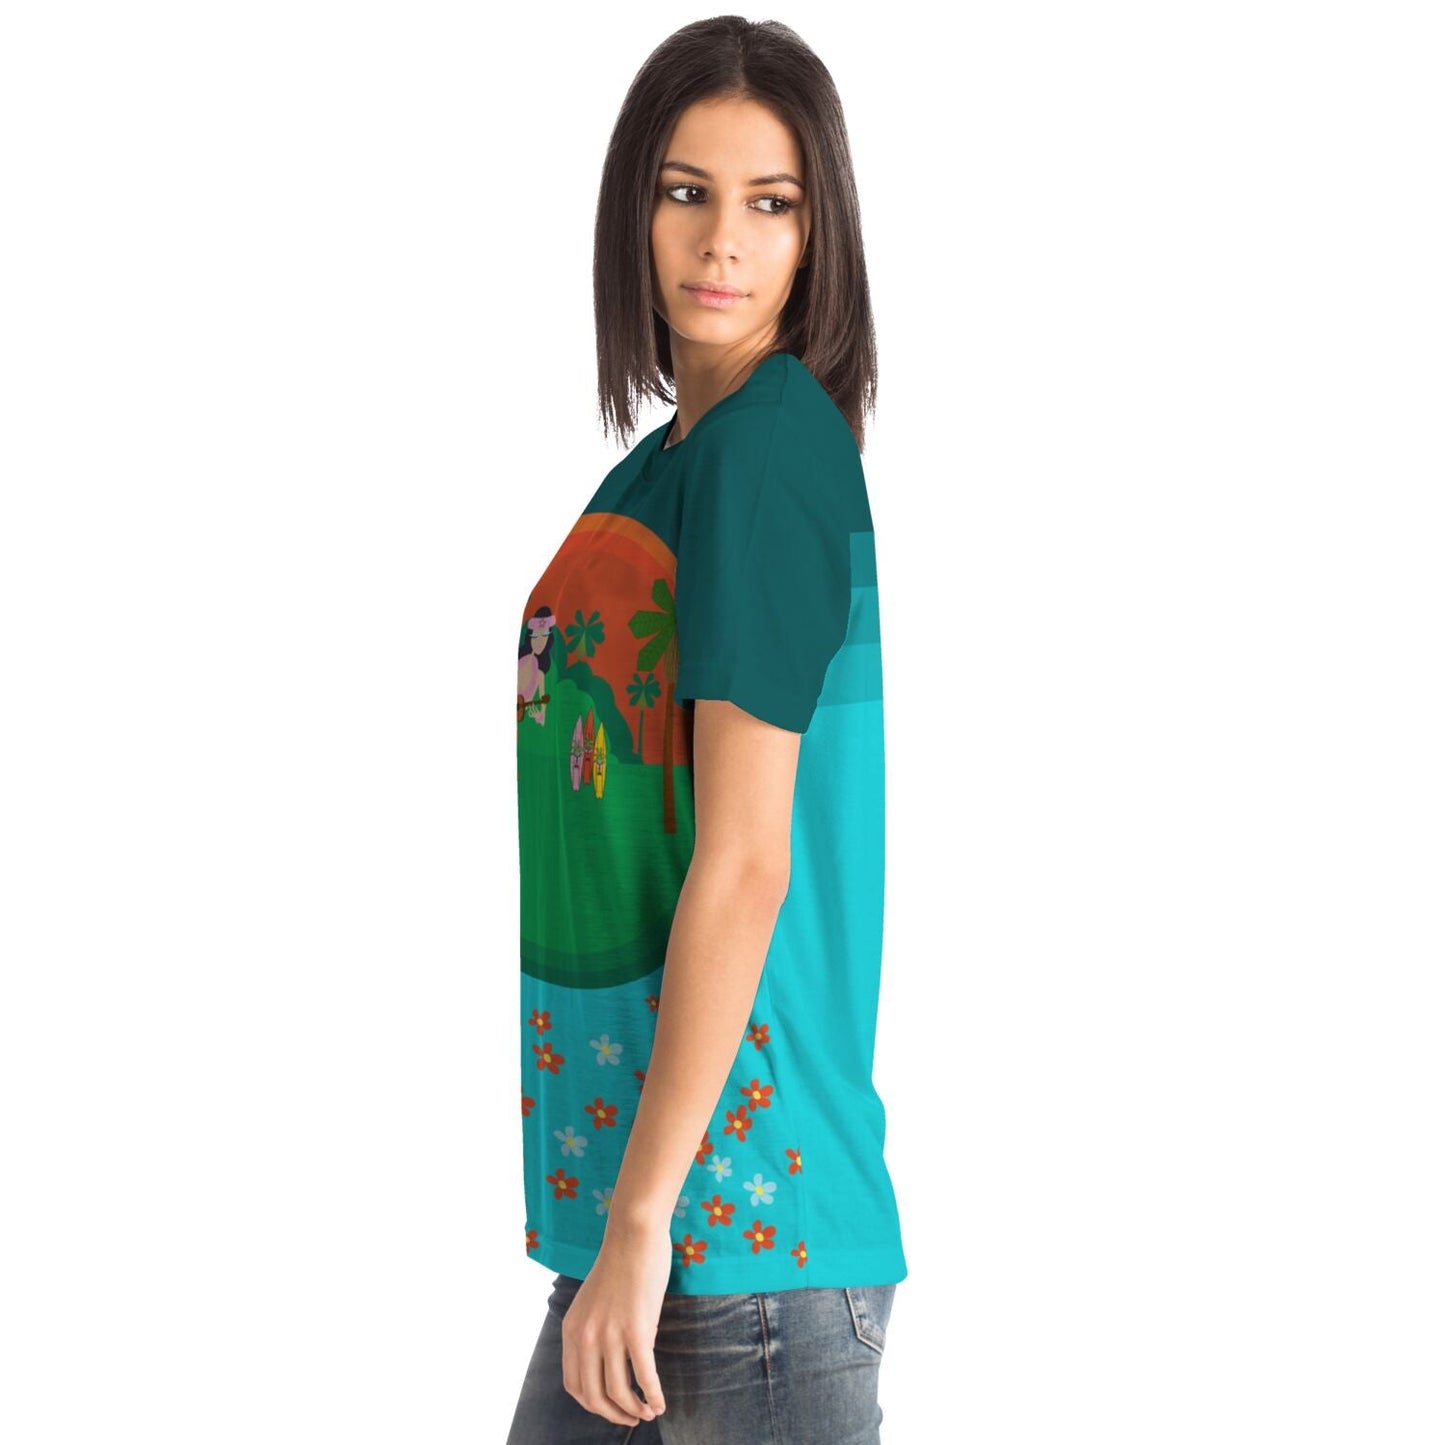 Hula Dance T-shirt - Gifternaut